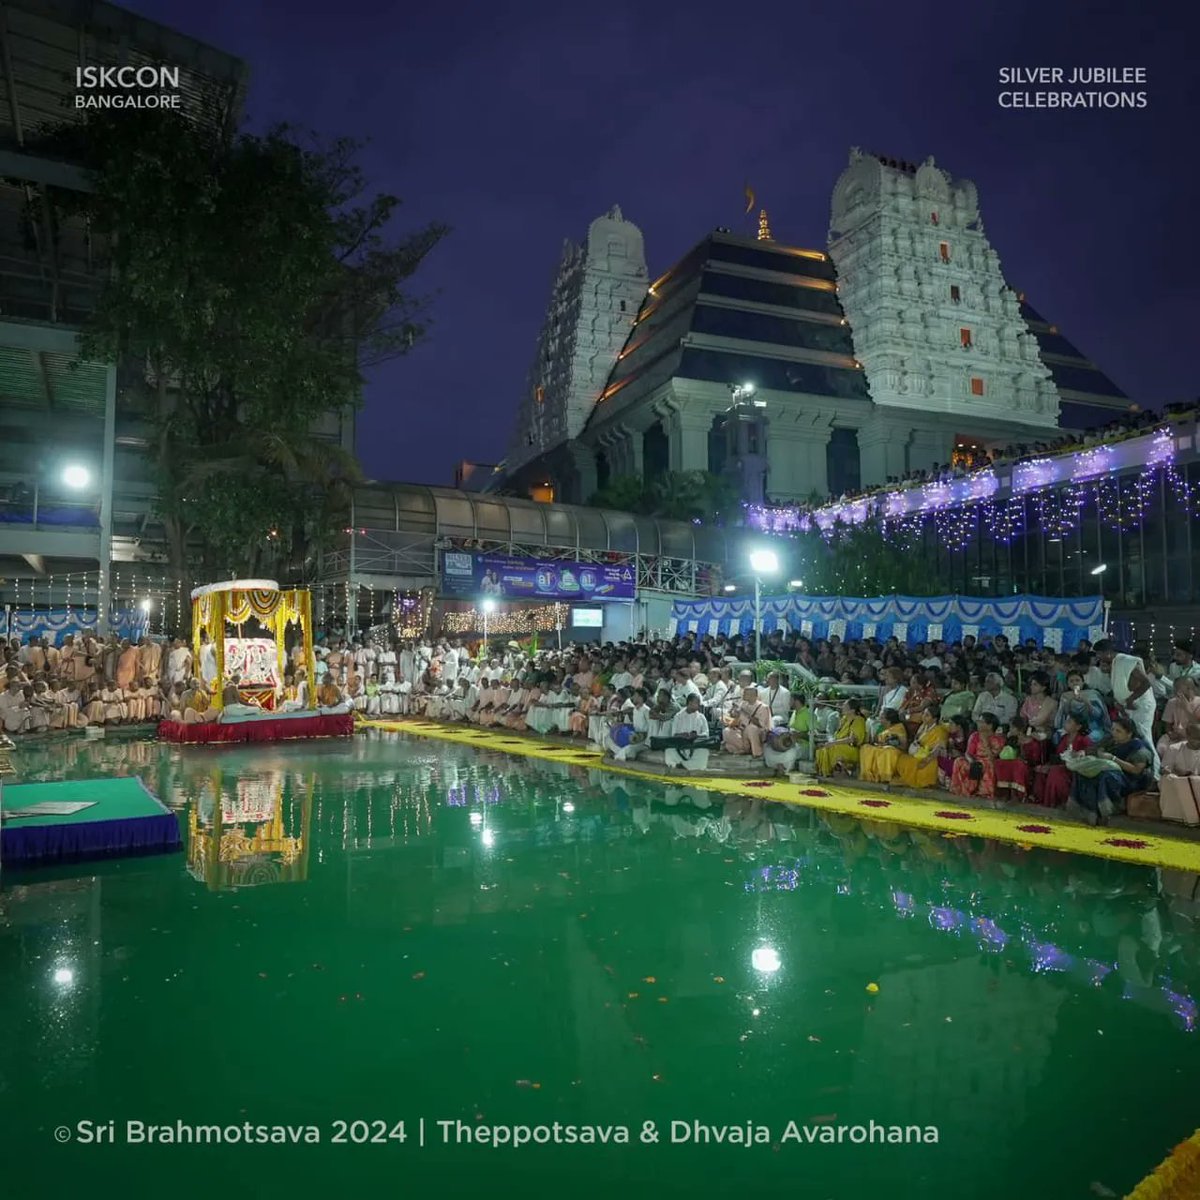 The grand festival of Sri Brahmotsava 2024 drew to a close yesterday with Theppotsava. Sri Radha Krishnachandra were adorned in Sri Yamunatira-Vanachari alankara. They received a pleasure boat ride in the temple's Kalyani. Following the boat ride Dhvaja Avarohana ceremony was